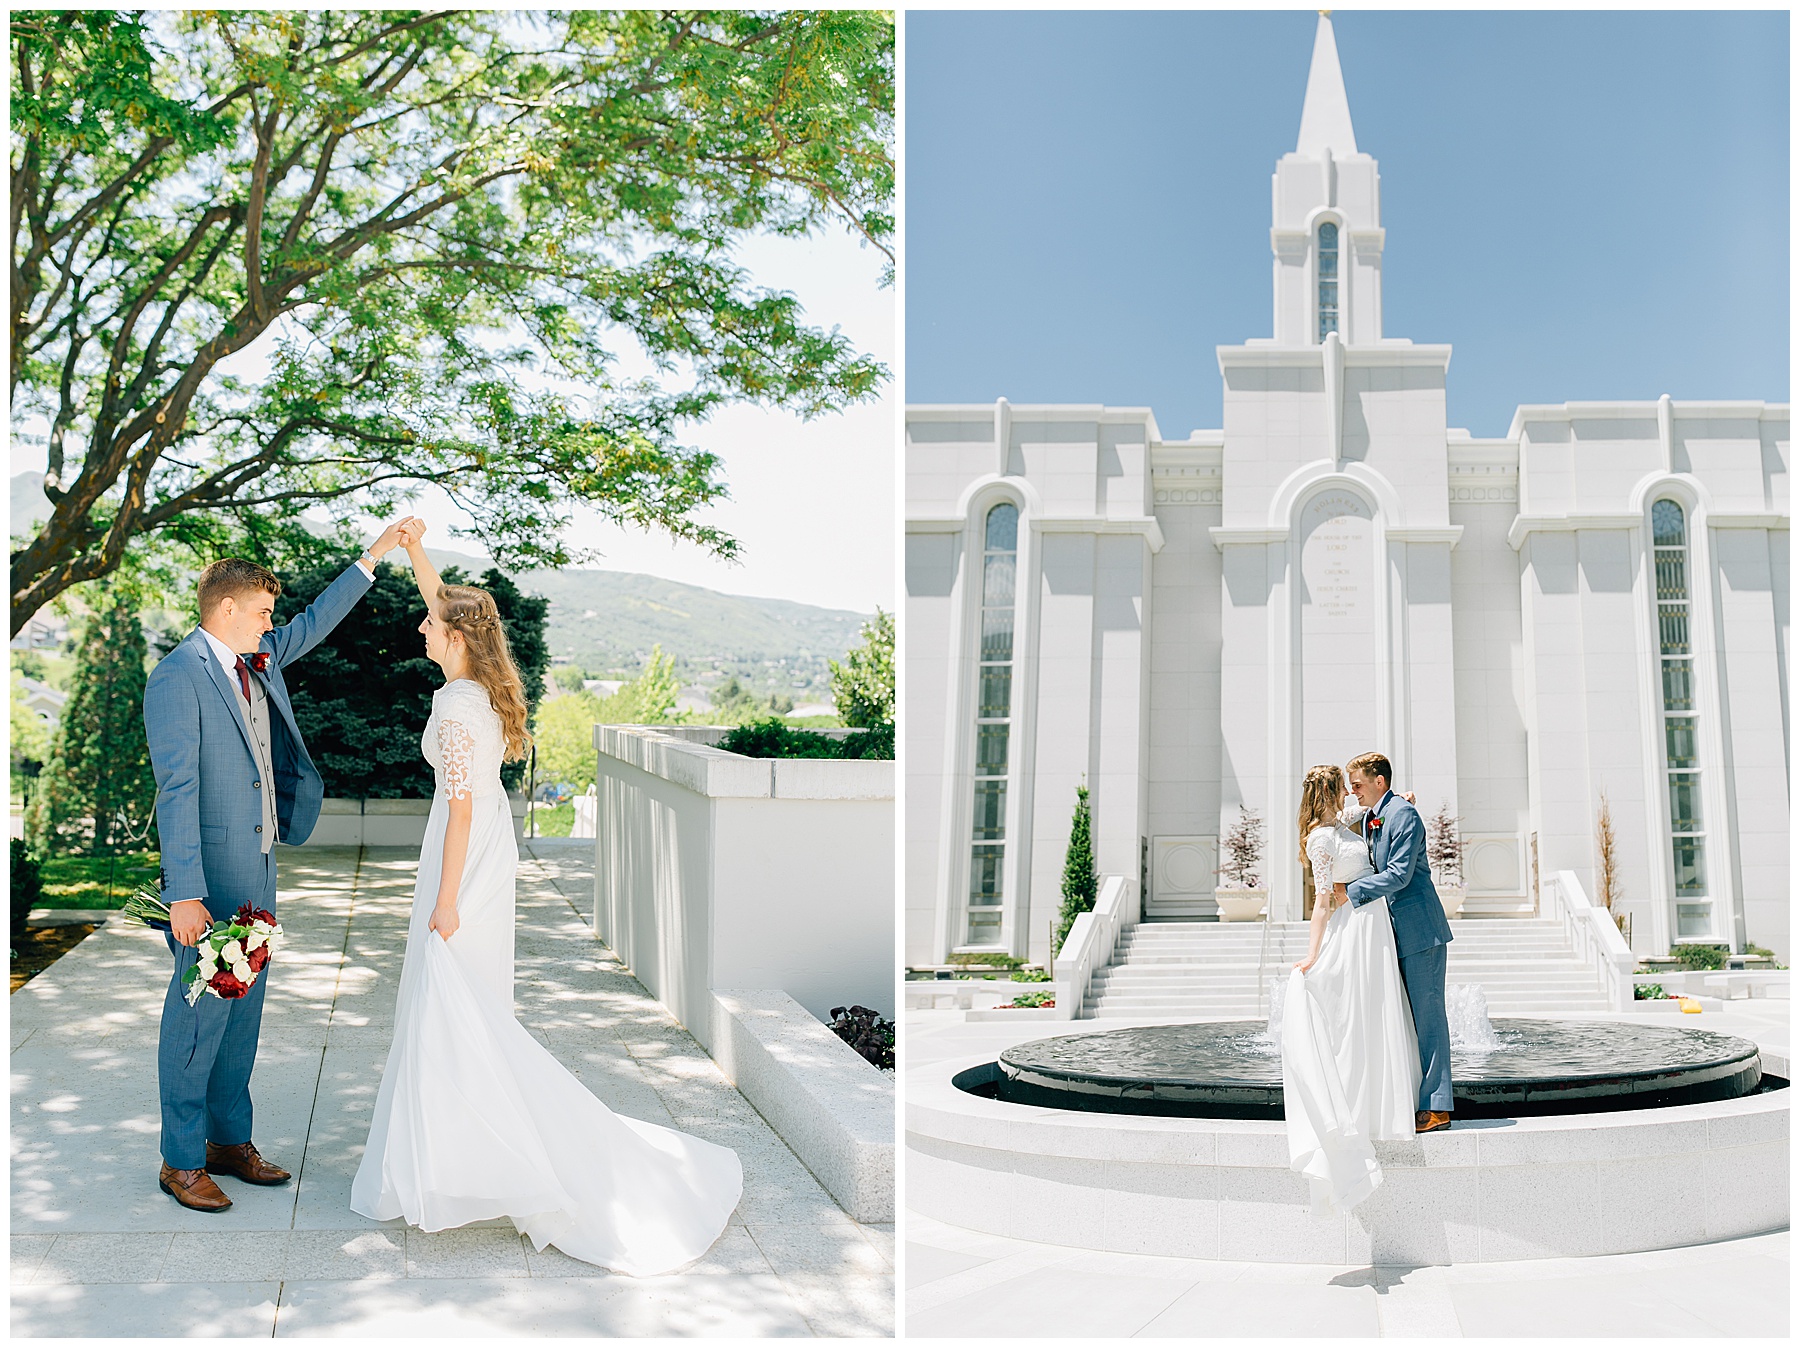 Alex + Tia | Bountiful Temple Wedding | Wheeler Farm Reception